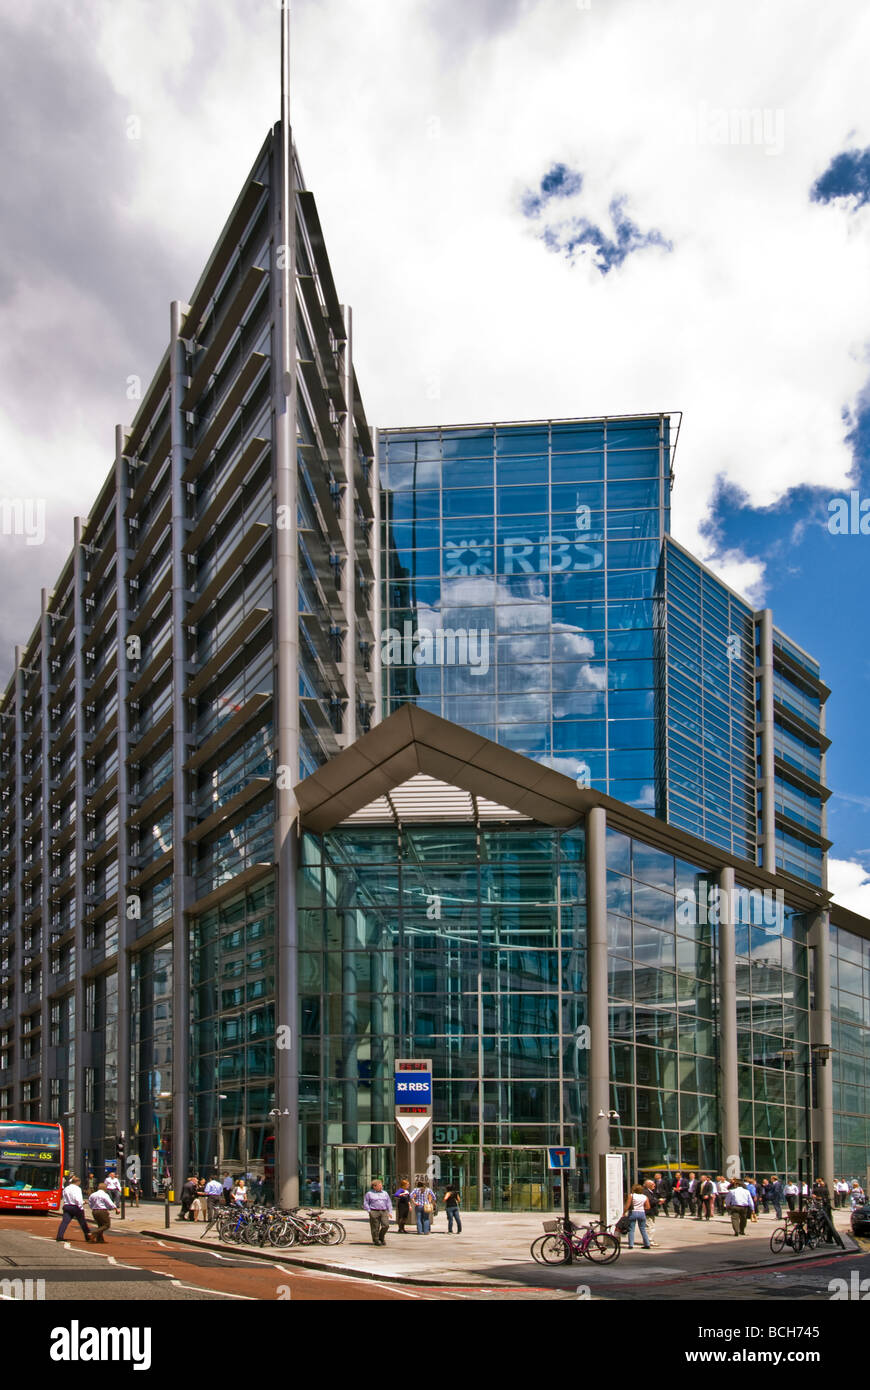 RBS - The Royal Bank of Scotland, Bishopsgate, siège, London, England, UK Banque D'Images